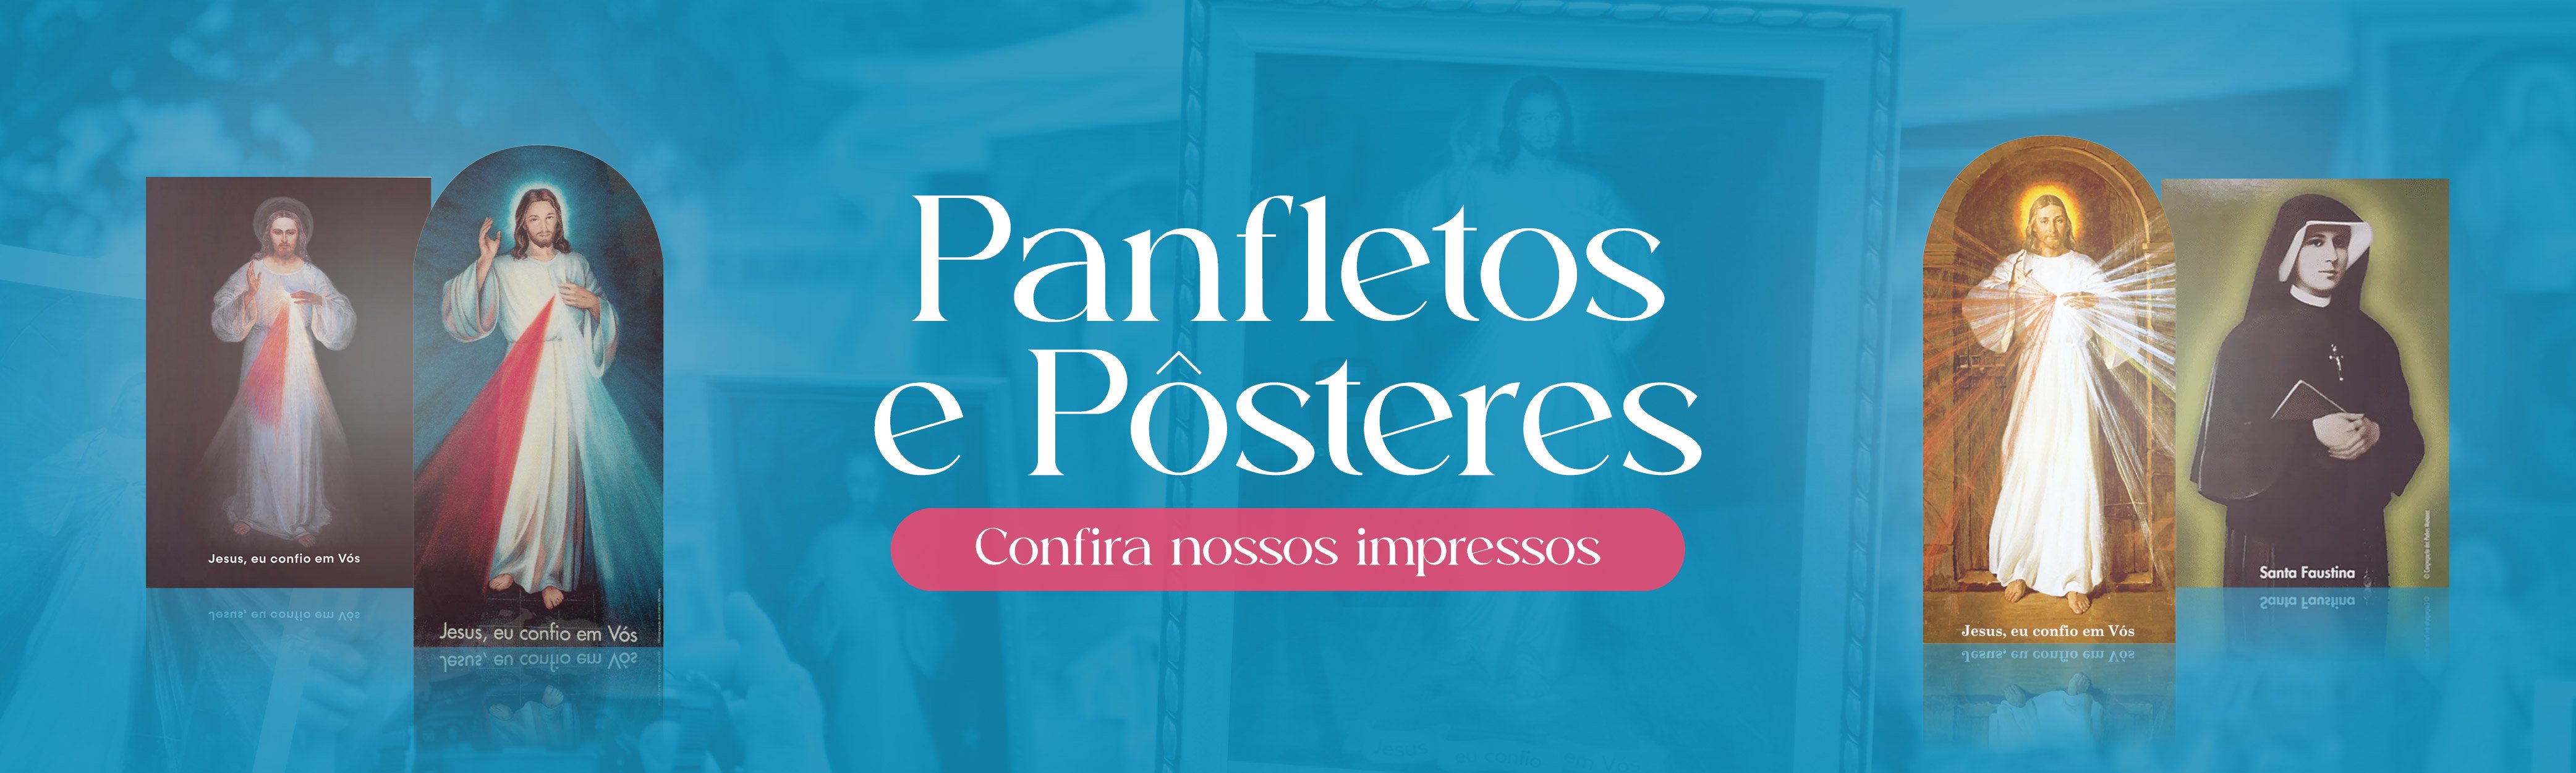 panfletos-posteres-divinamisericordia